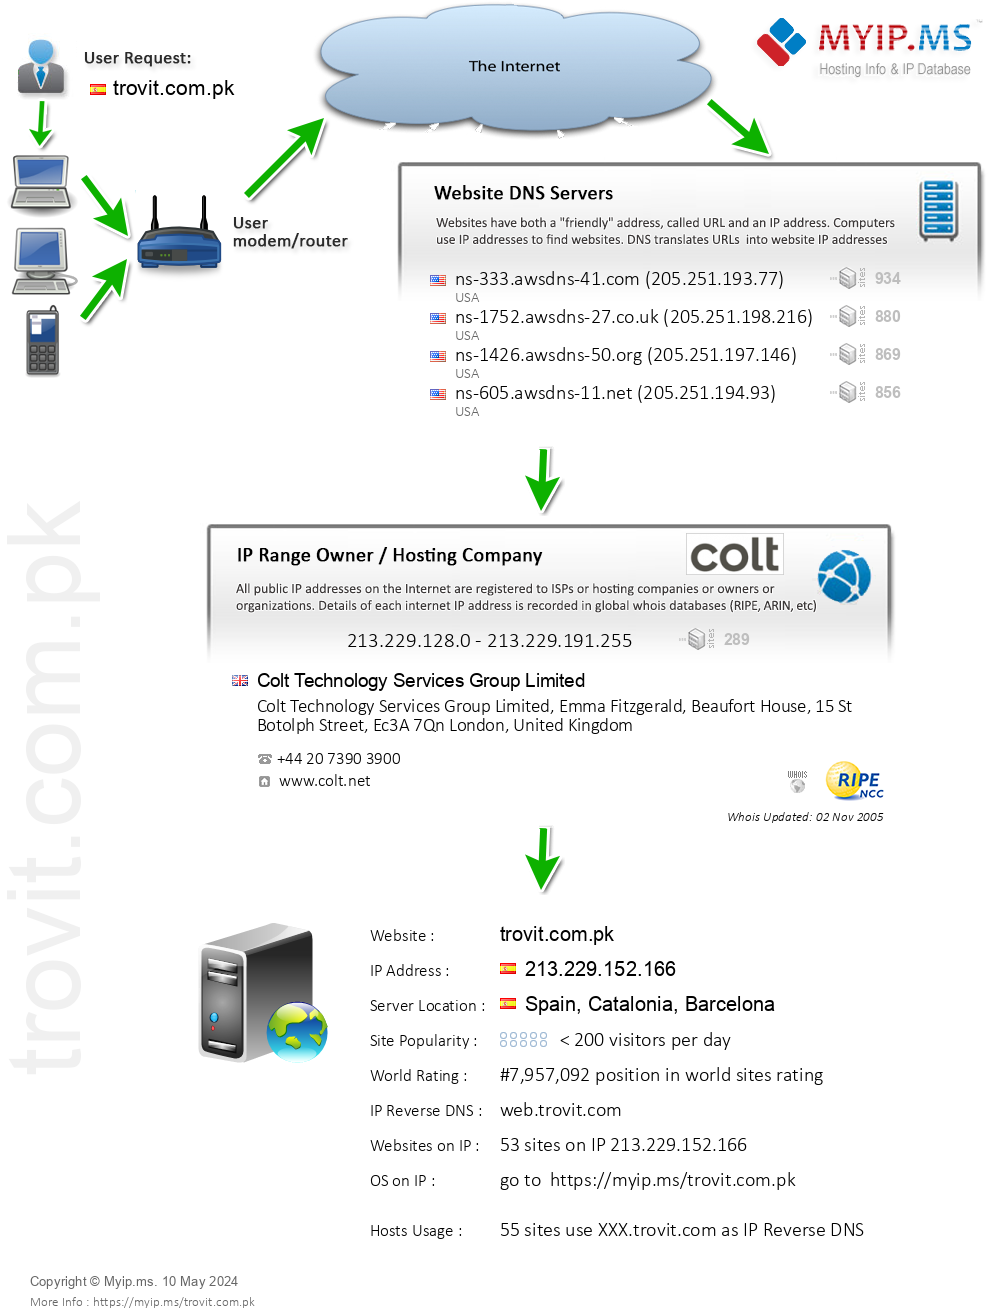 Trovit.com.pk - Website Hosting Visual IP Diagram